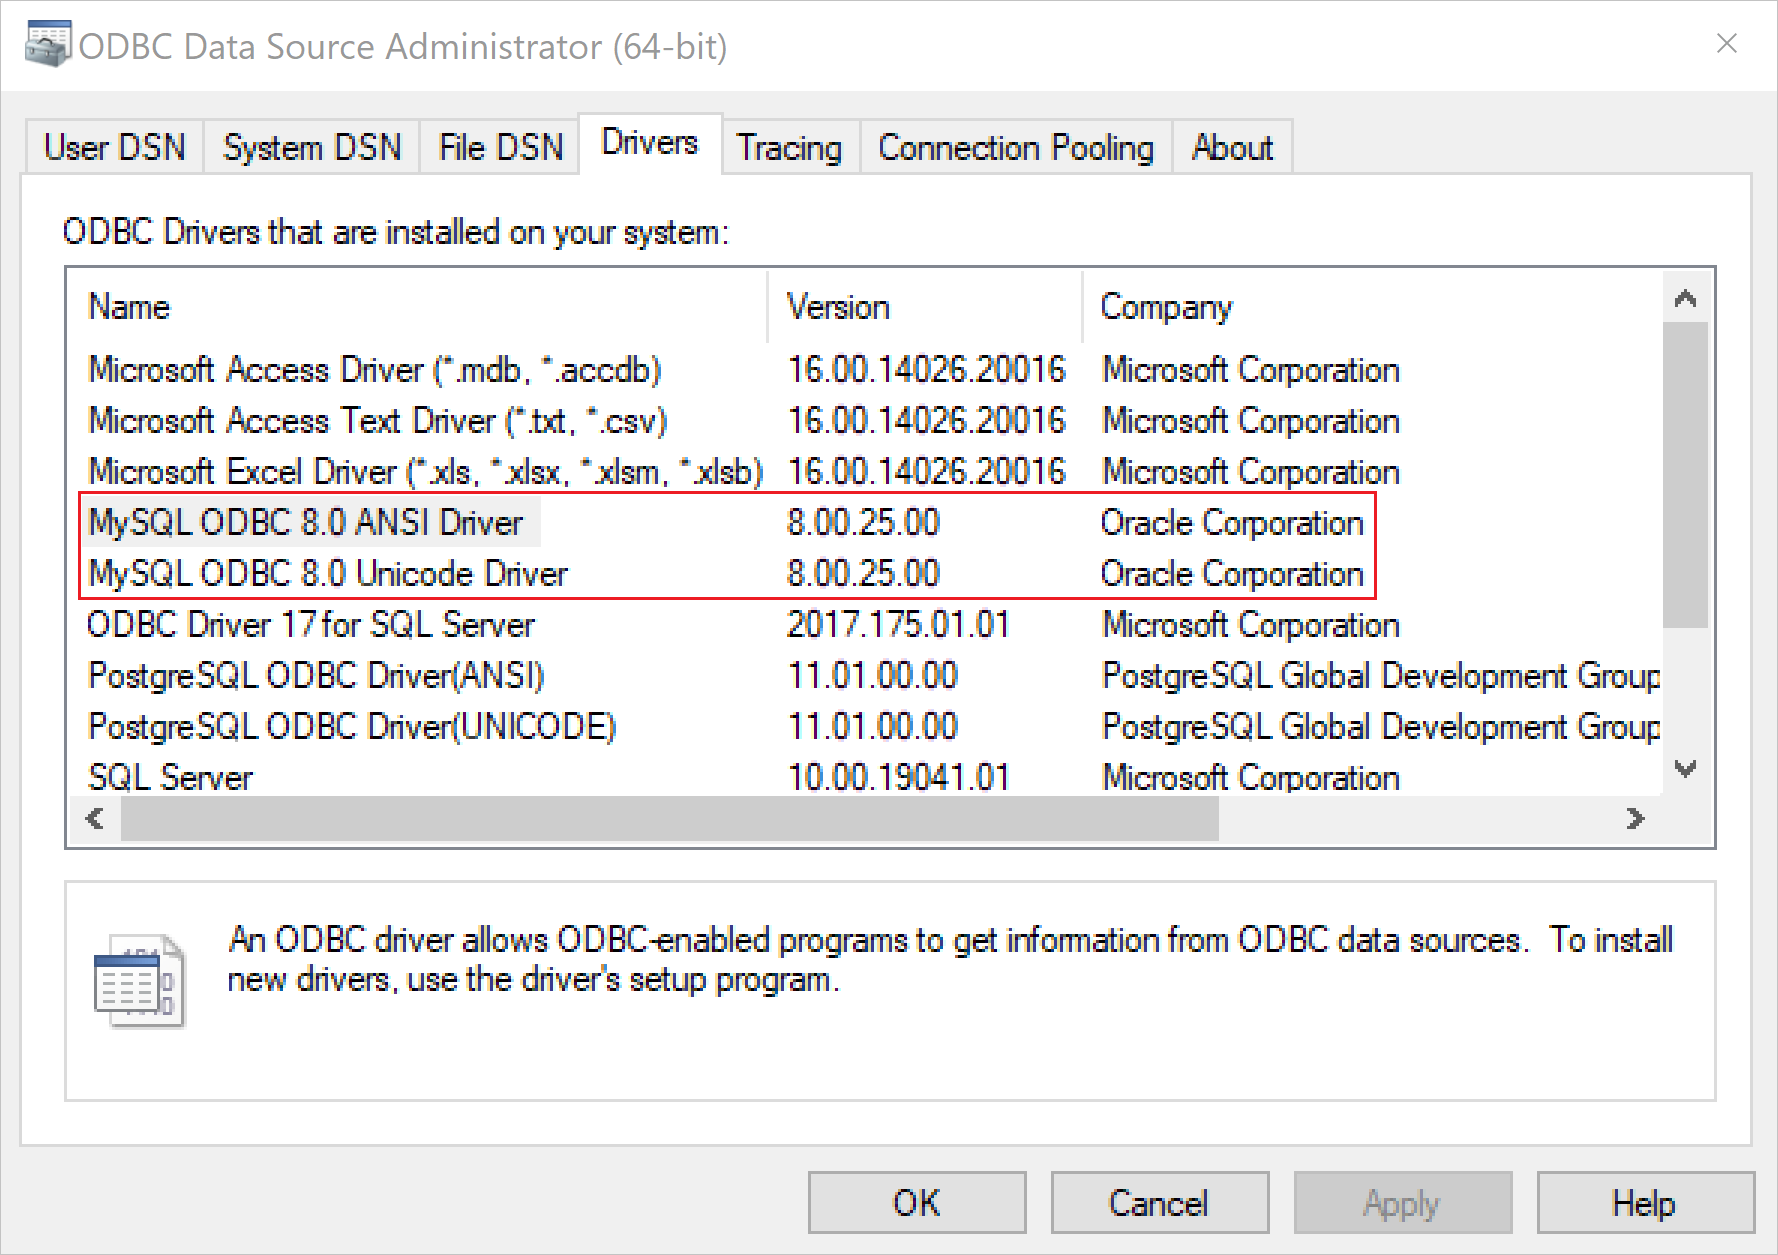 ODBC Data Source Administrator page